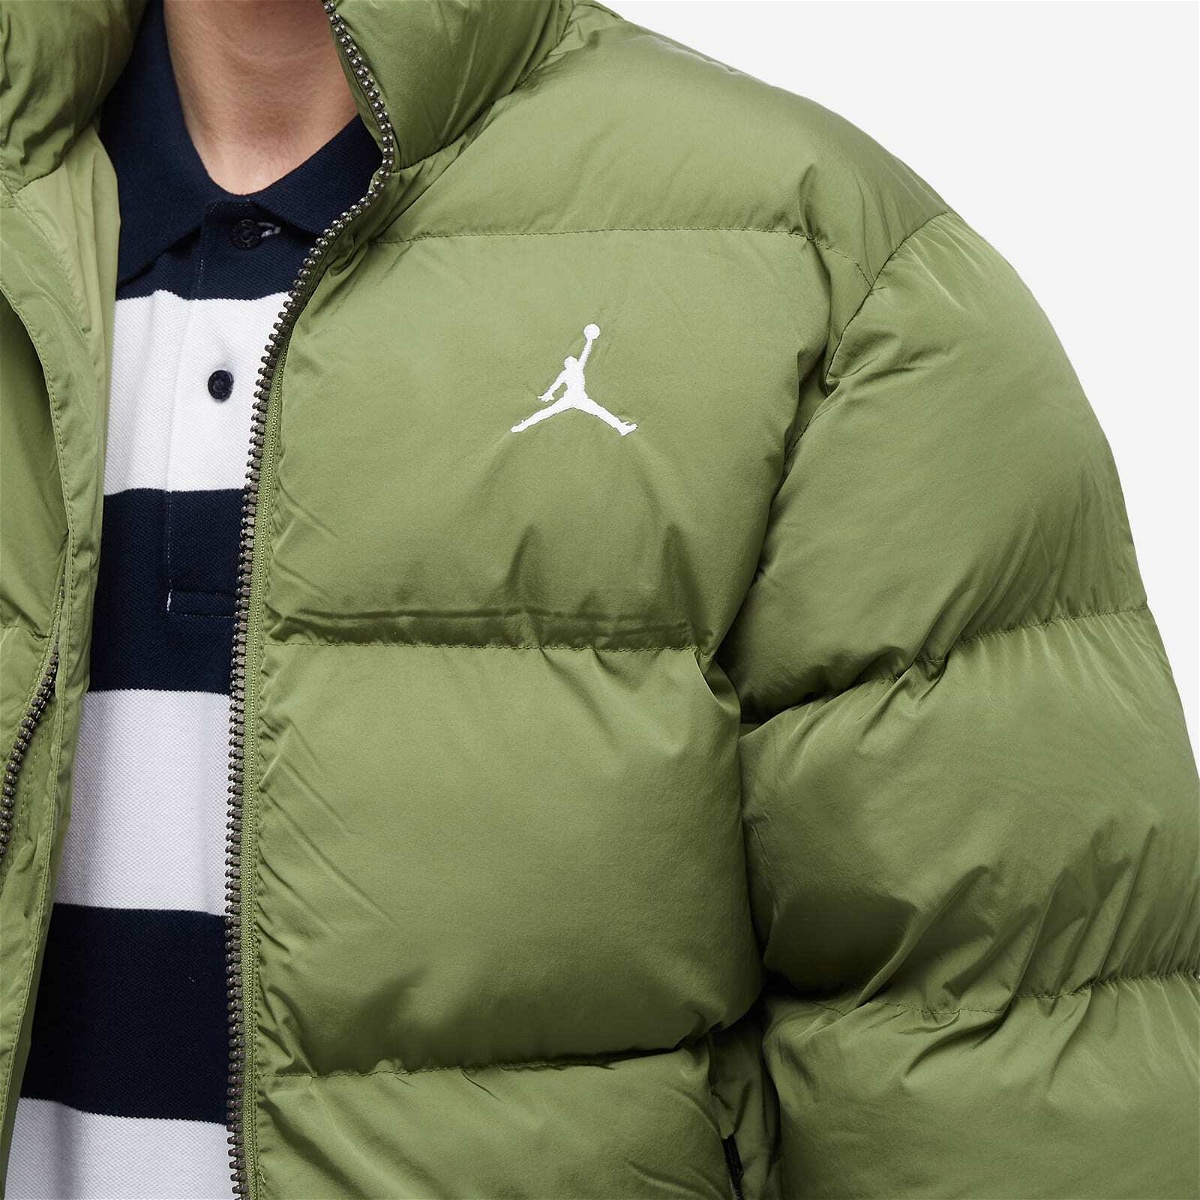 Men's Jordan Essential Puffer Jacket